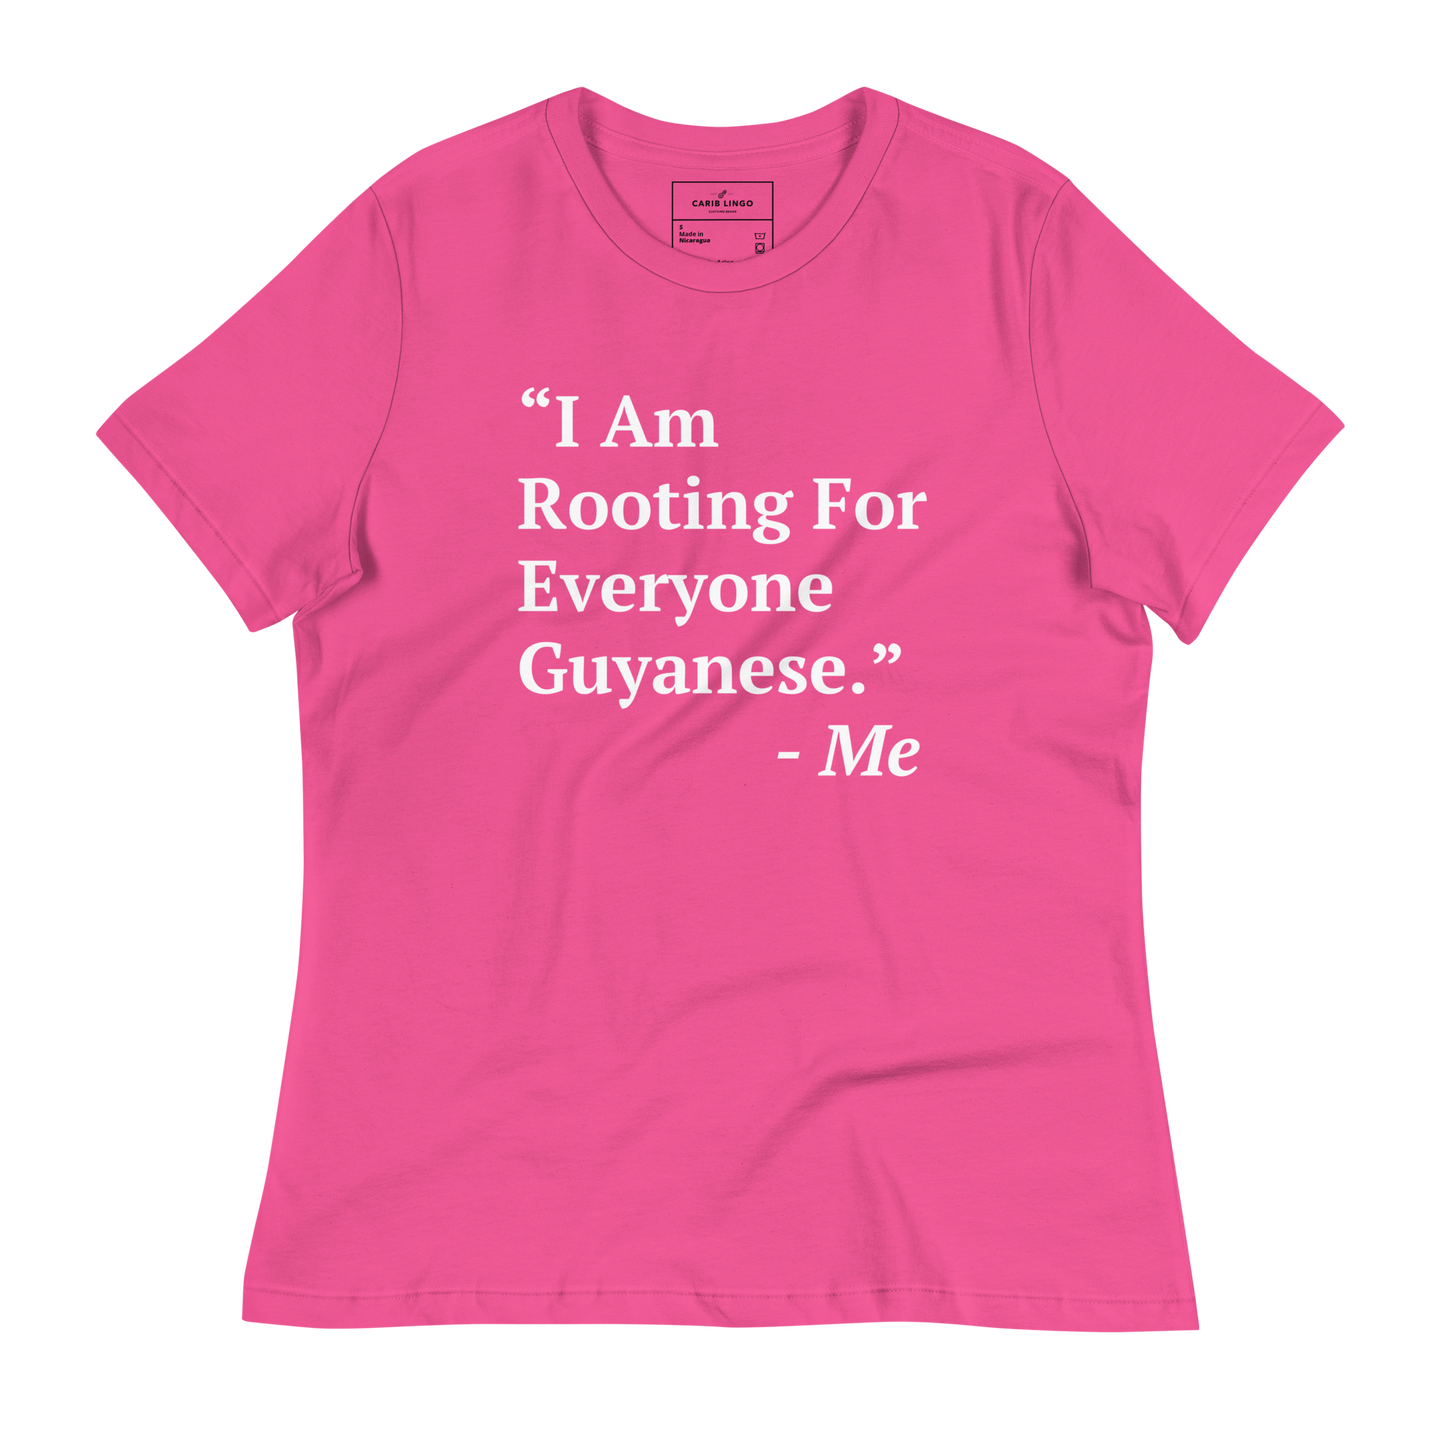 I Am Rooting: Guyana Women's Relaxed T-Shirt